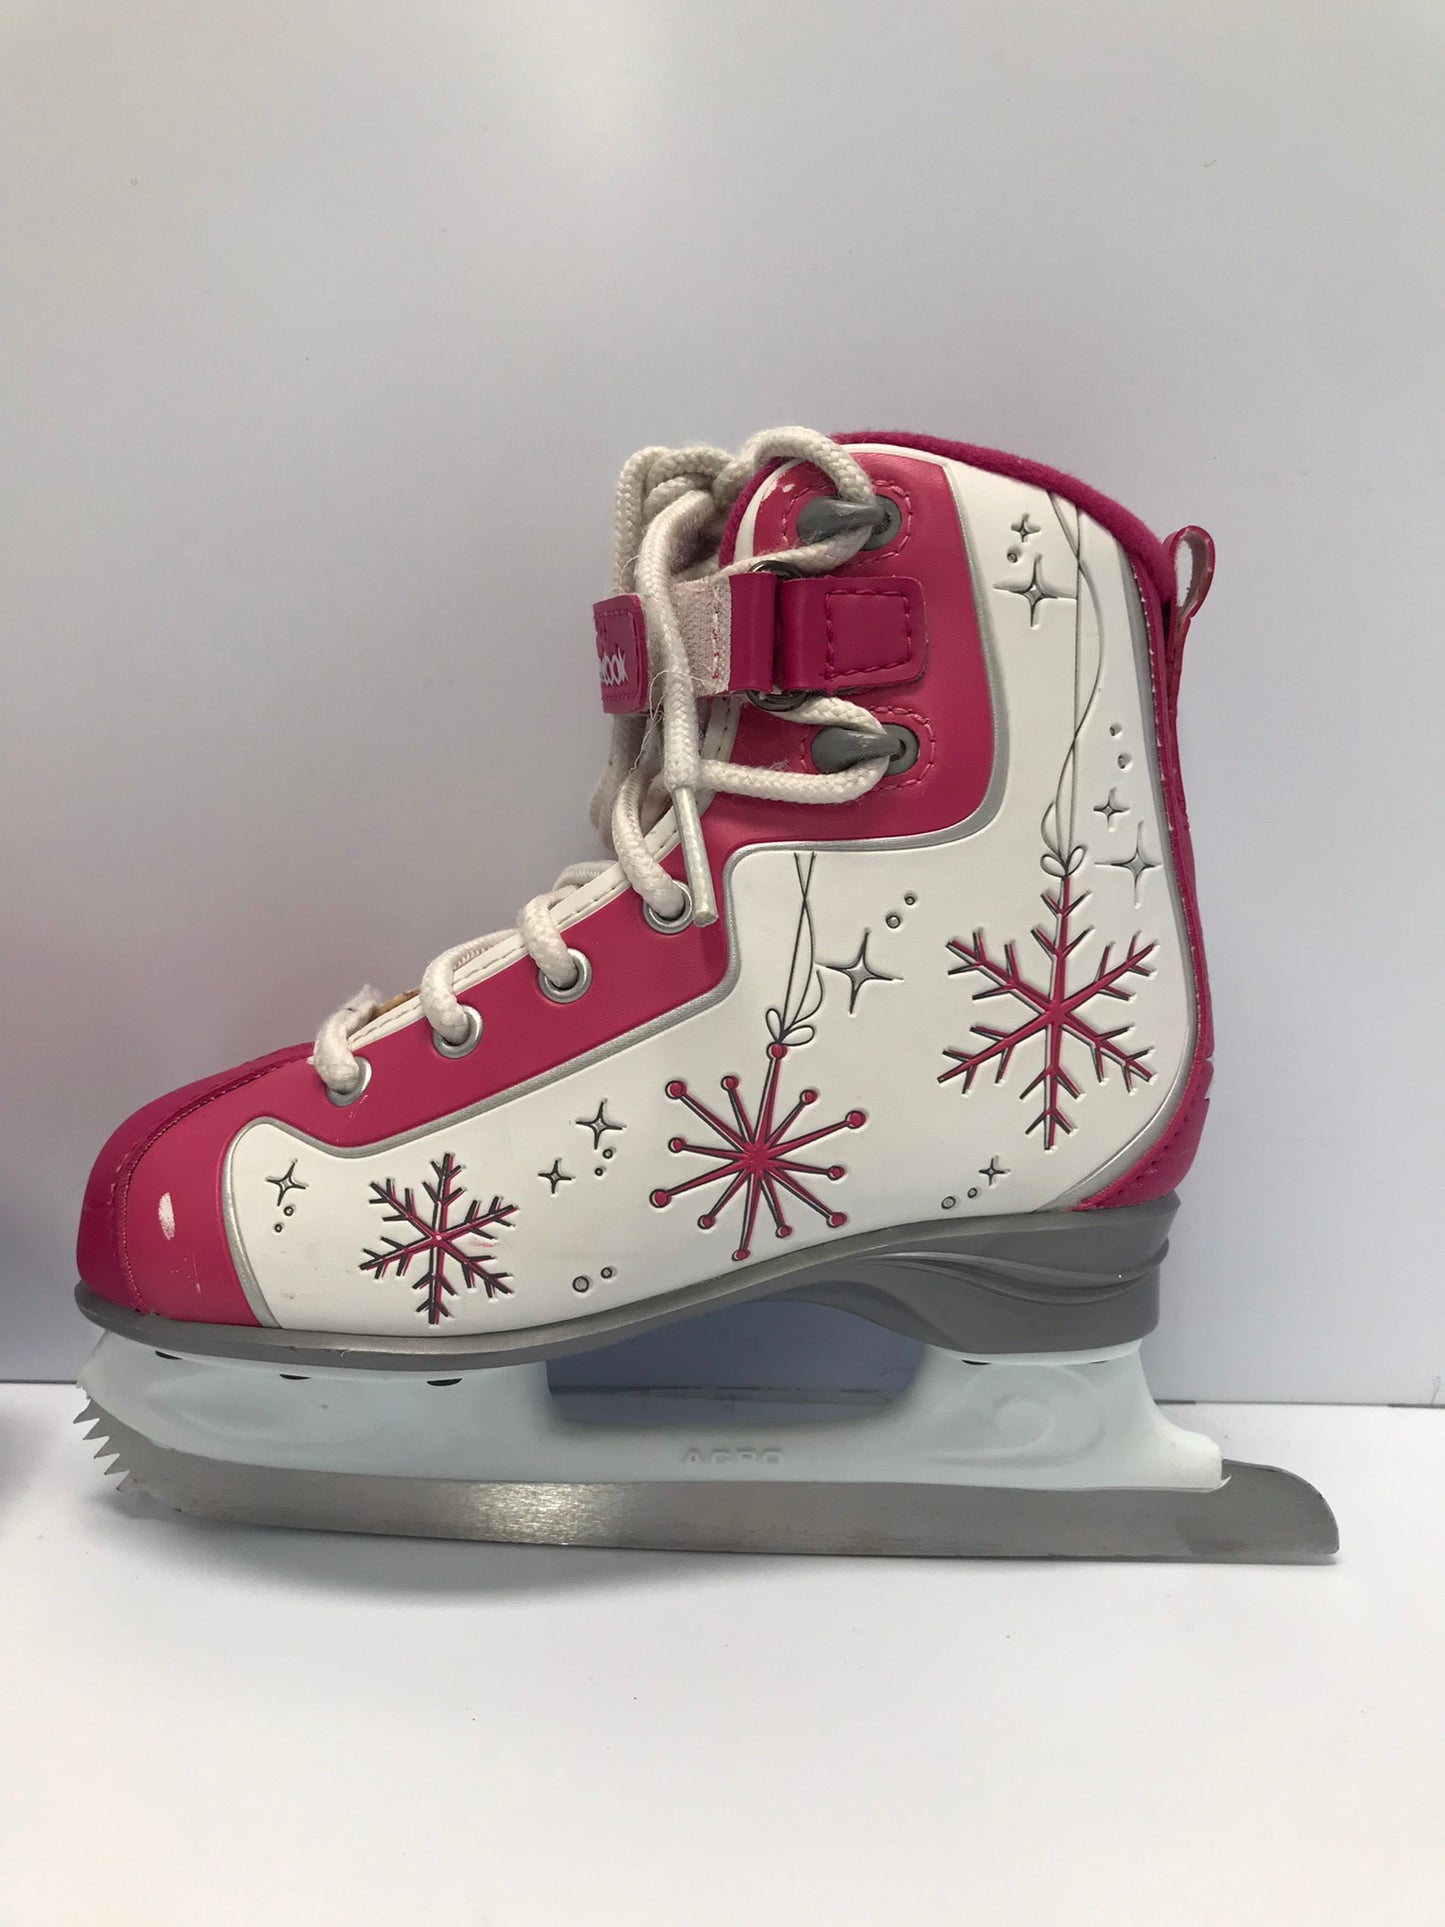 Figure Skates Child Size 1 Shoe Size Reebok Glitter Girl Raspberry White Soft Skates As New